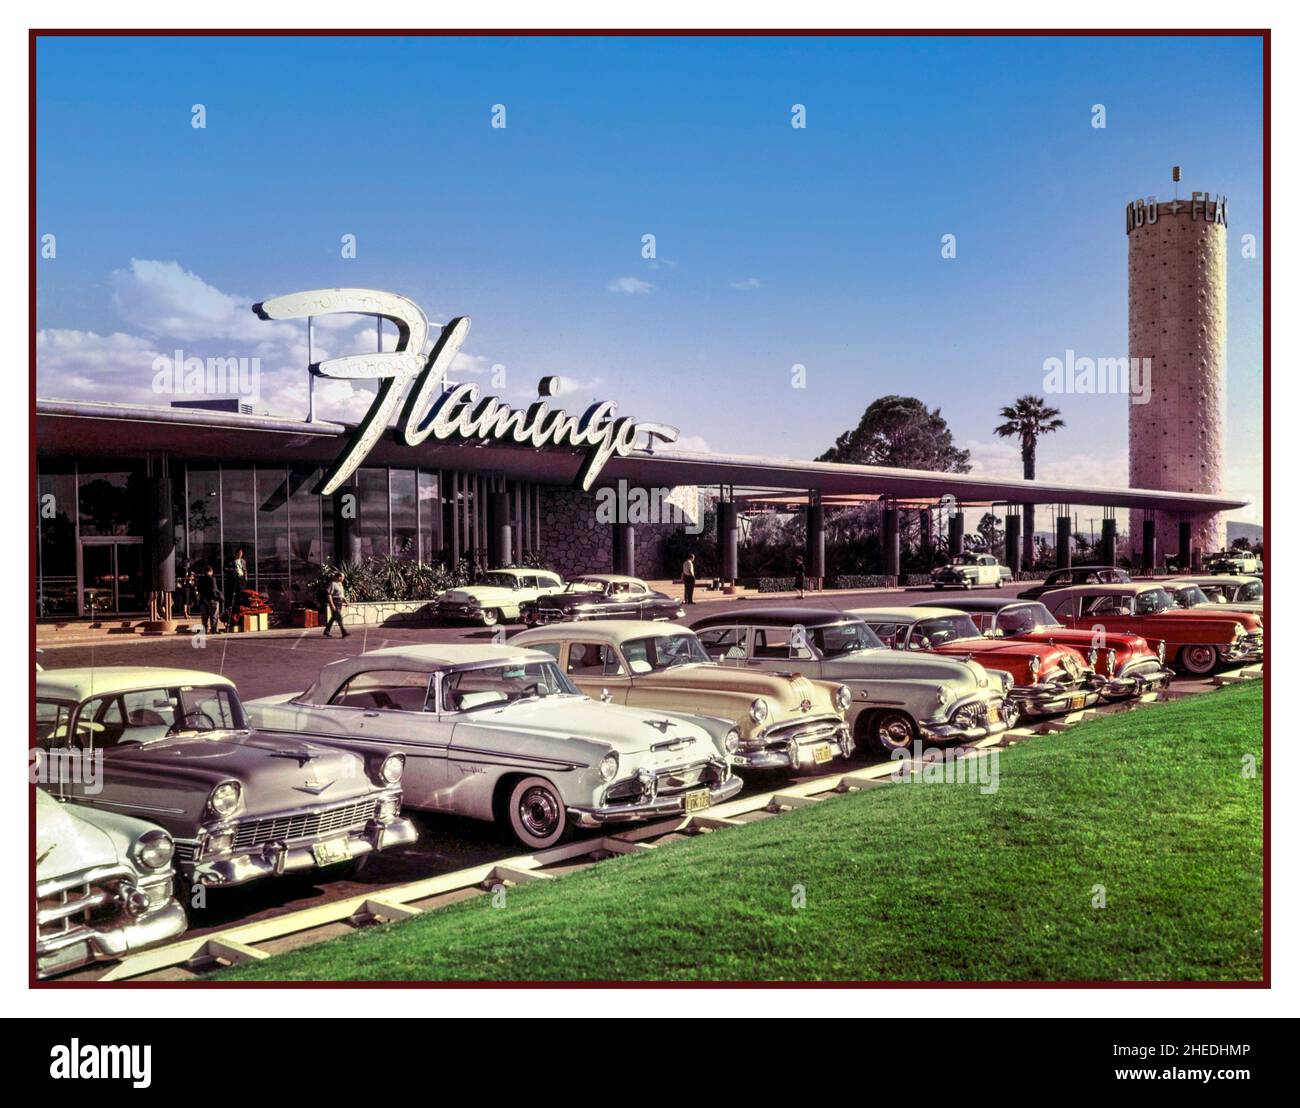 FLAMINGO LAS VEGAS 1950s Retro-Postkarte, die das ursprüngliche fabelhafte Flamingo Hotel and Casino, Las Vegas, darstellt, das am 26. Dezember 1946 eröffnet wurde. 1950s FLAMINGO Las Vegas Nevada USA Americana amerikanische Autos Parkplatz Vielzahl von Americana Amerika Retro-Oldtimer Stockfoto